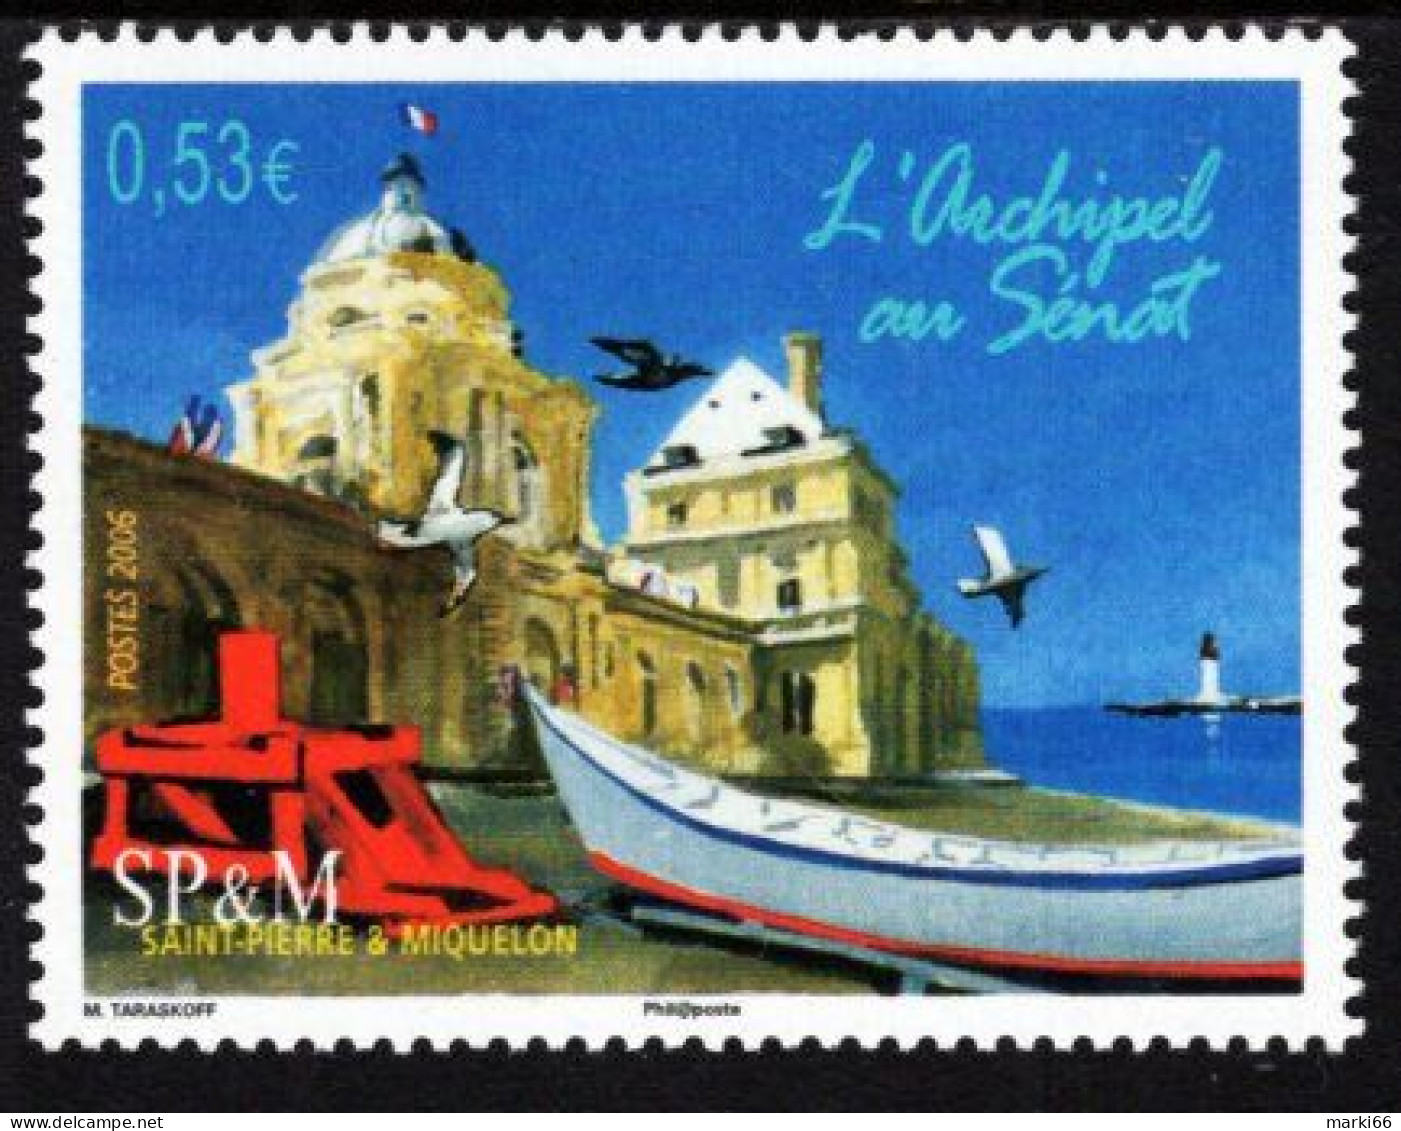 St. Pierre & Miquelon - 2006 - SPM Senate And Philately - Stamp Salon In Paris - Mint Stamp - Unused Stamps